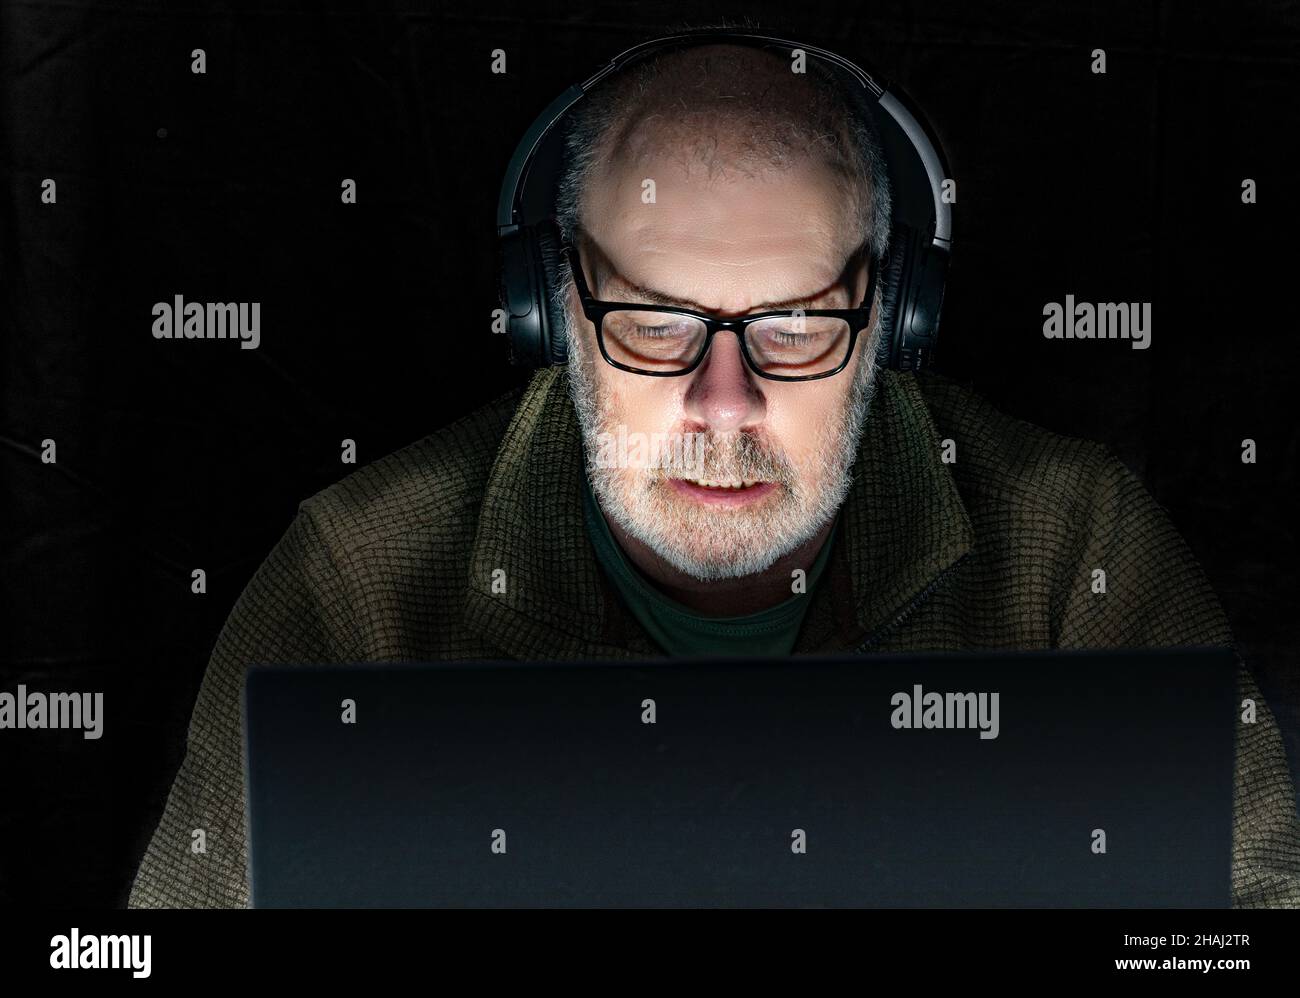 A white grey bearded male listening to music through headphones. low key lighting. Stock Photo